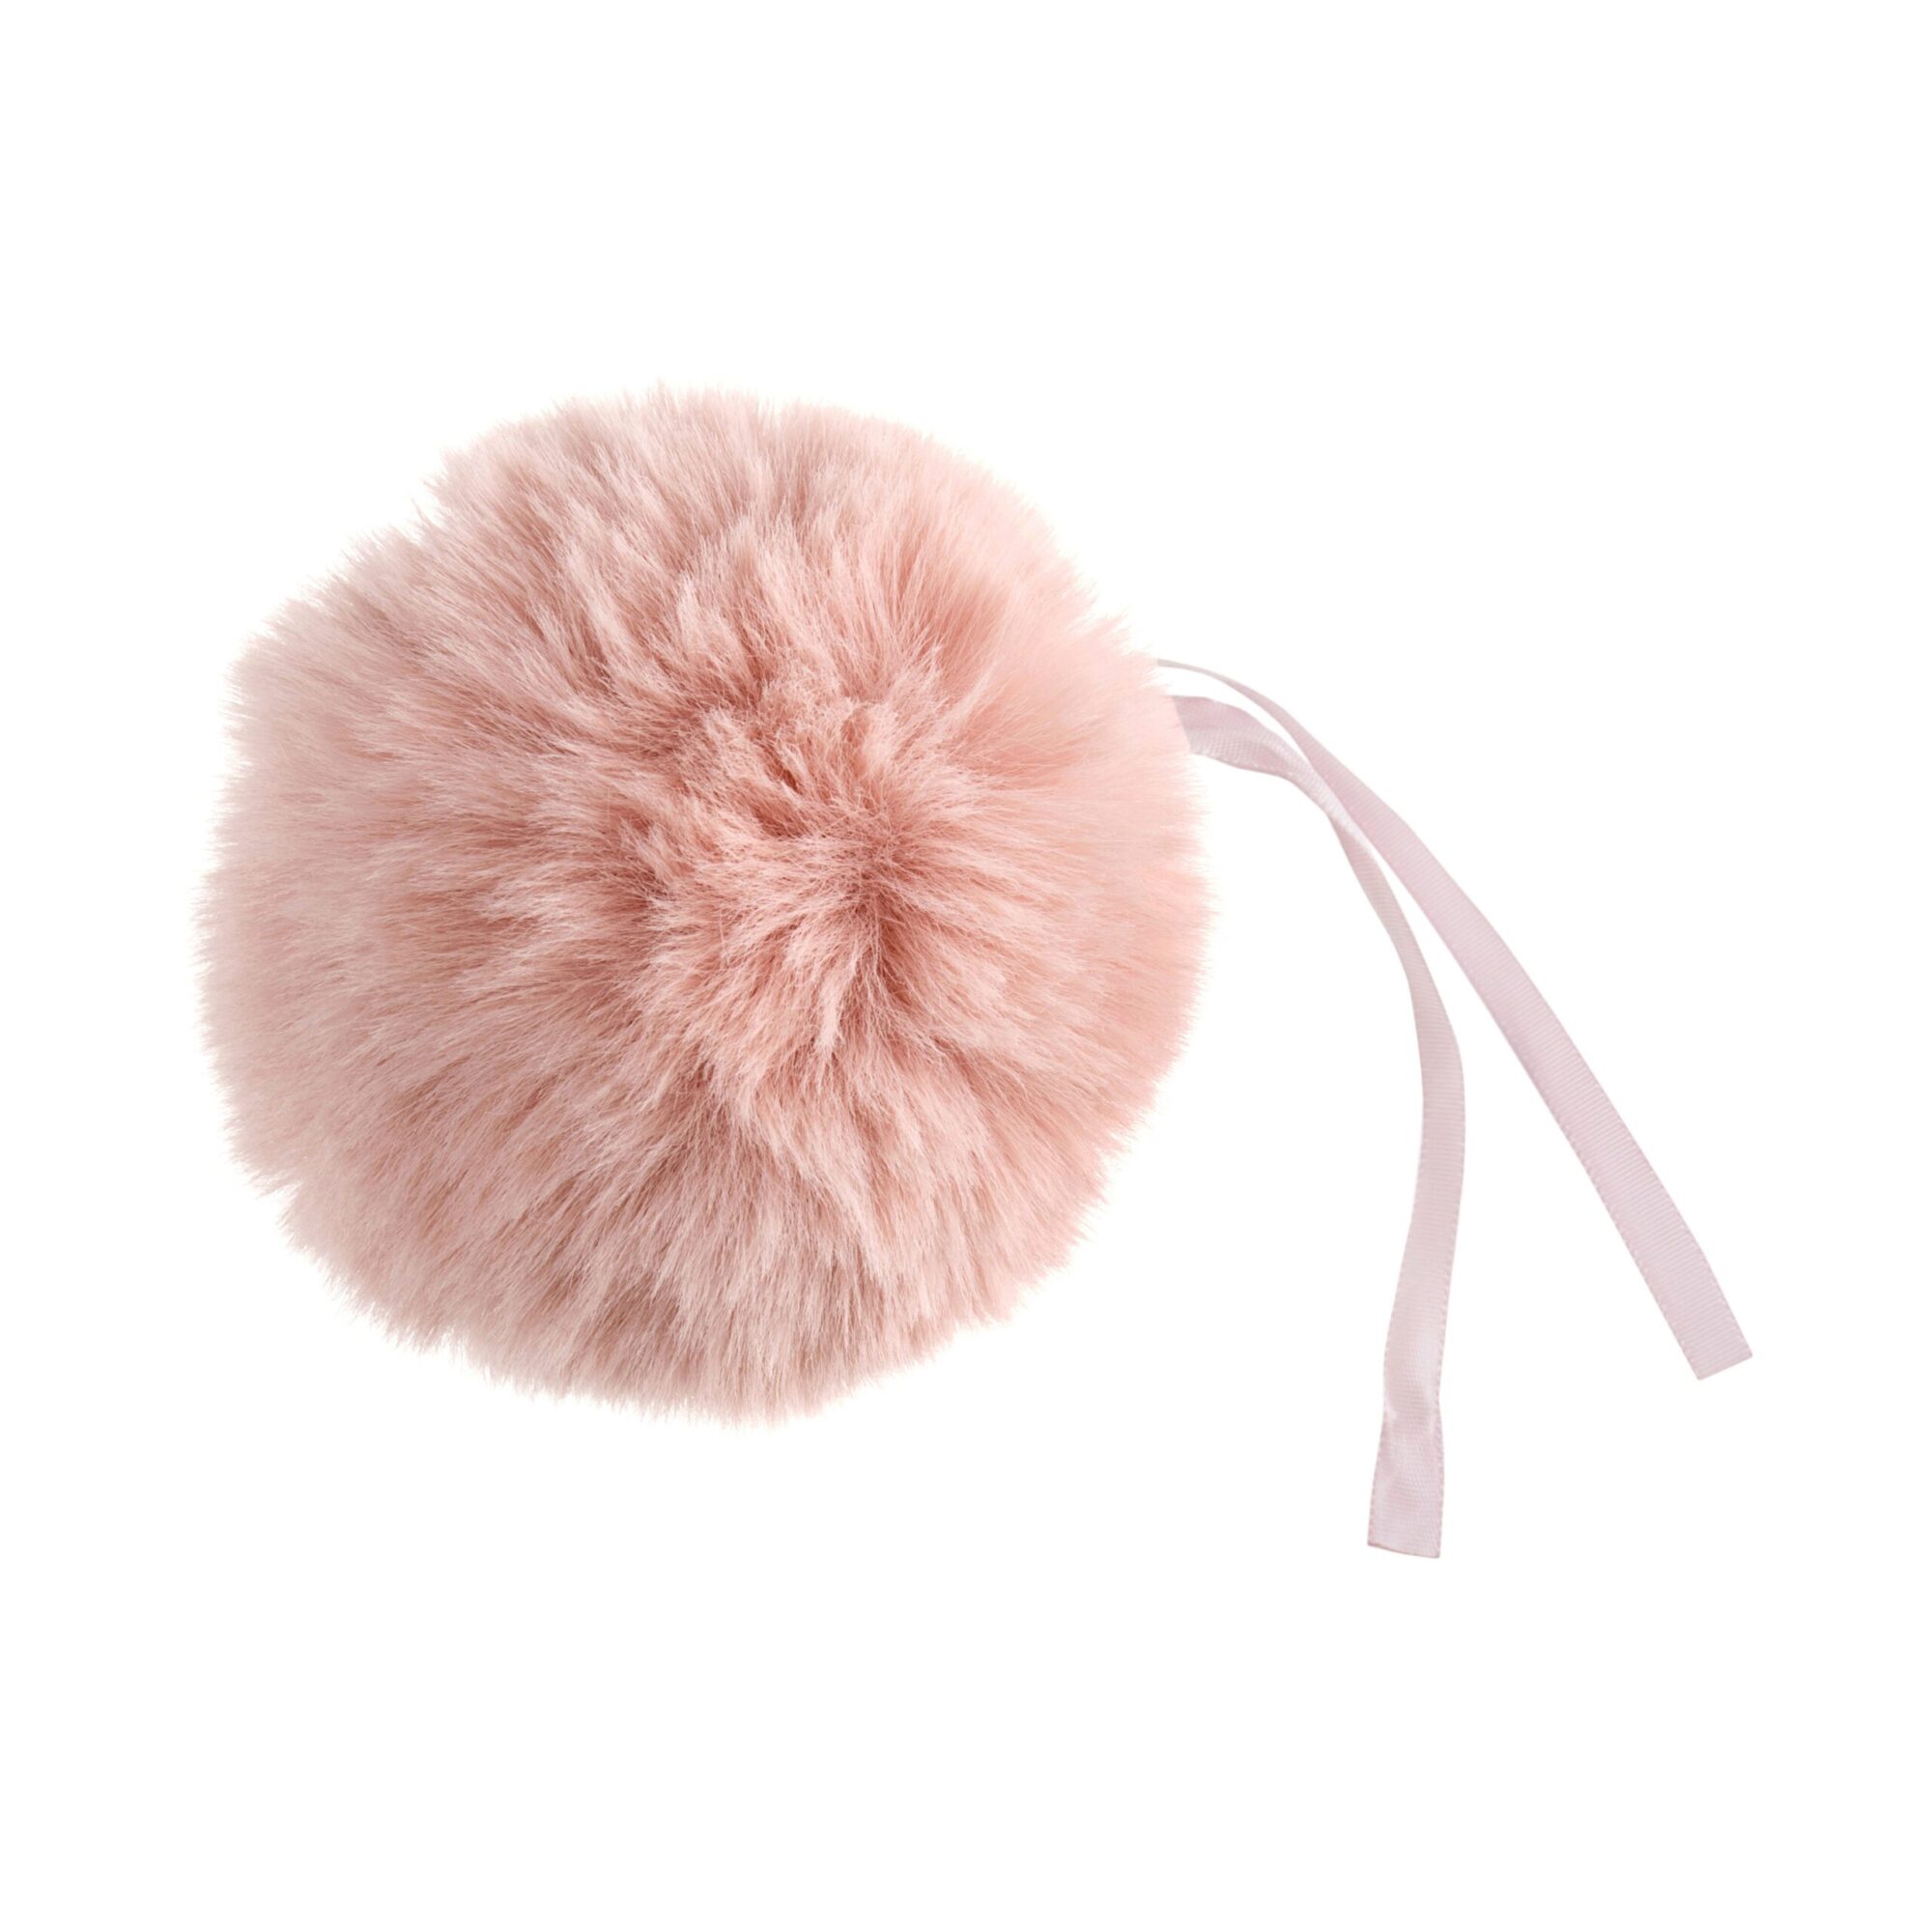 Large Faux Fur Pom Pom 11cm - Light Pink product image